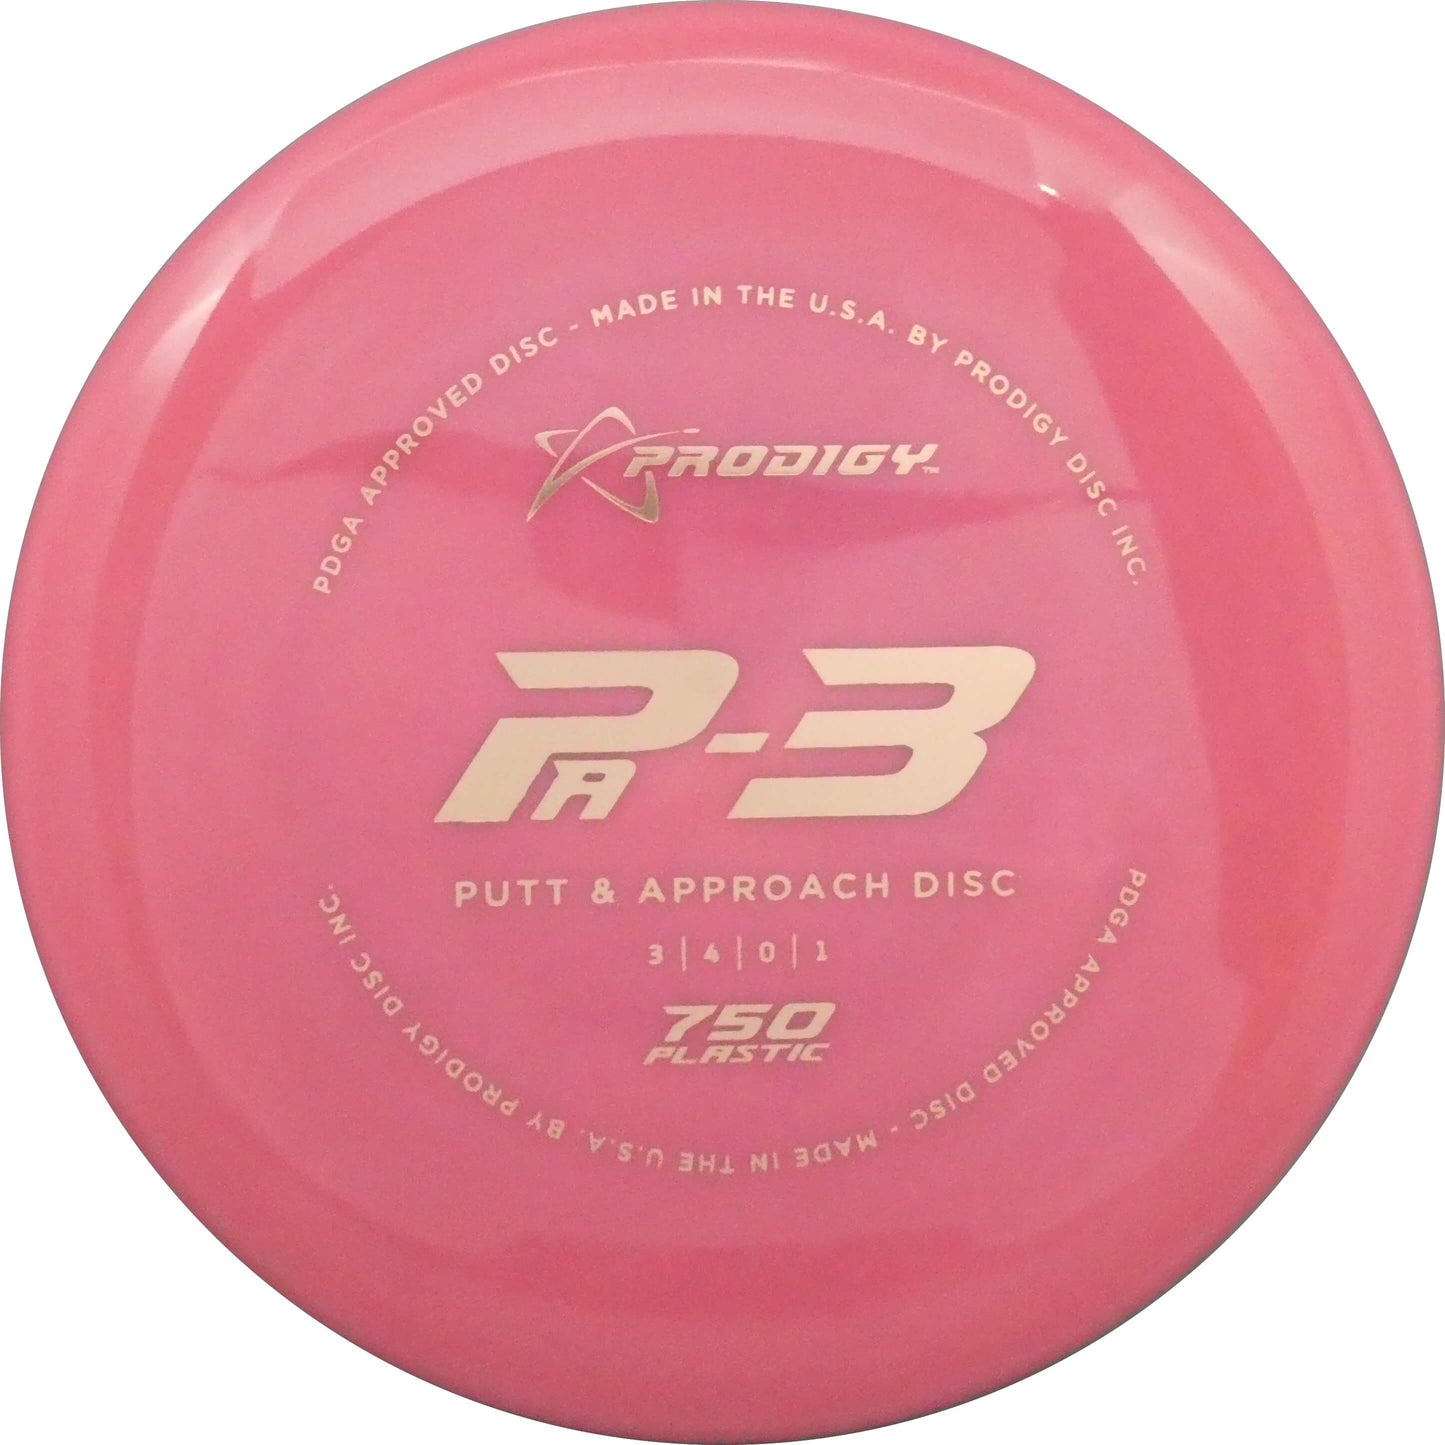 PA-3 Putt & Approach Disc 750 Plastic - 170-174g